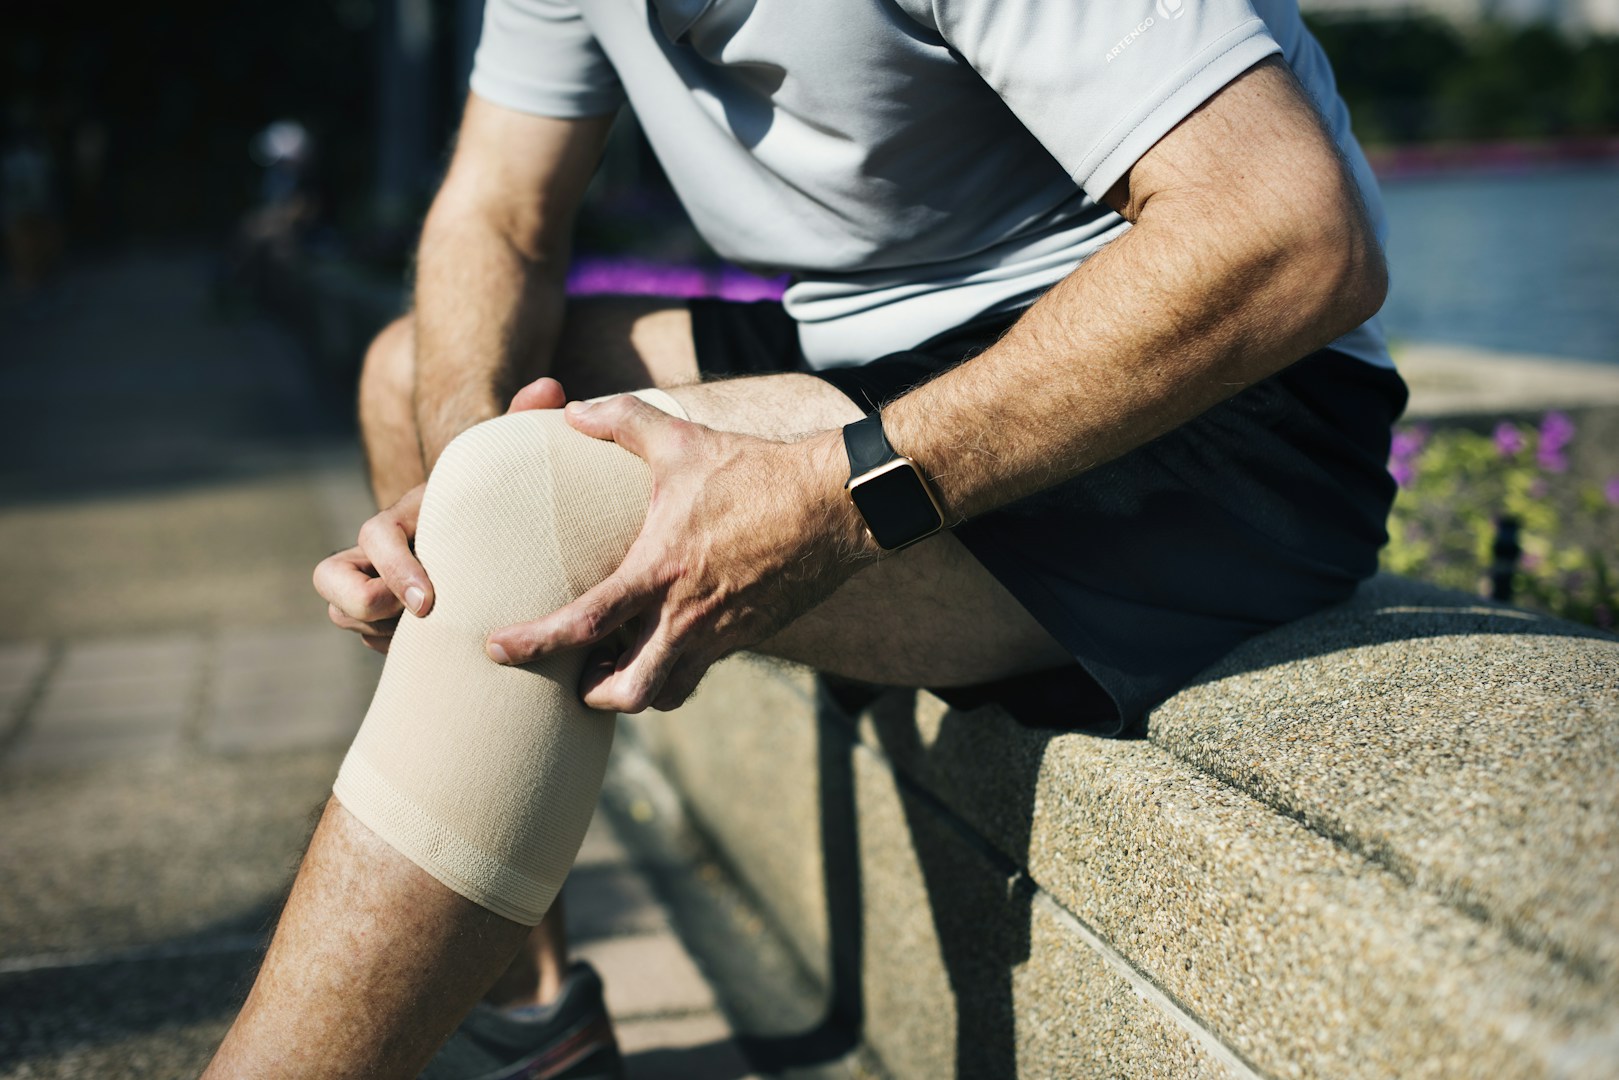 man with knee arthritis sitting down wearing a knee brace